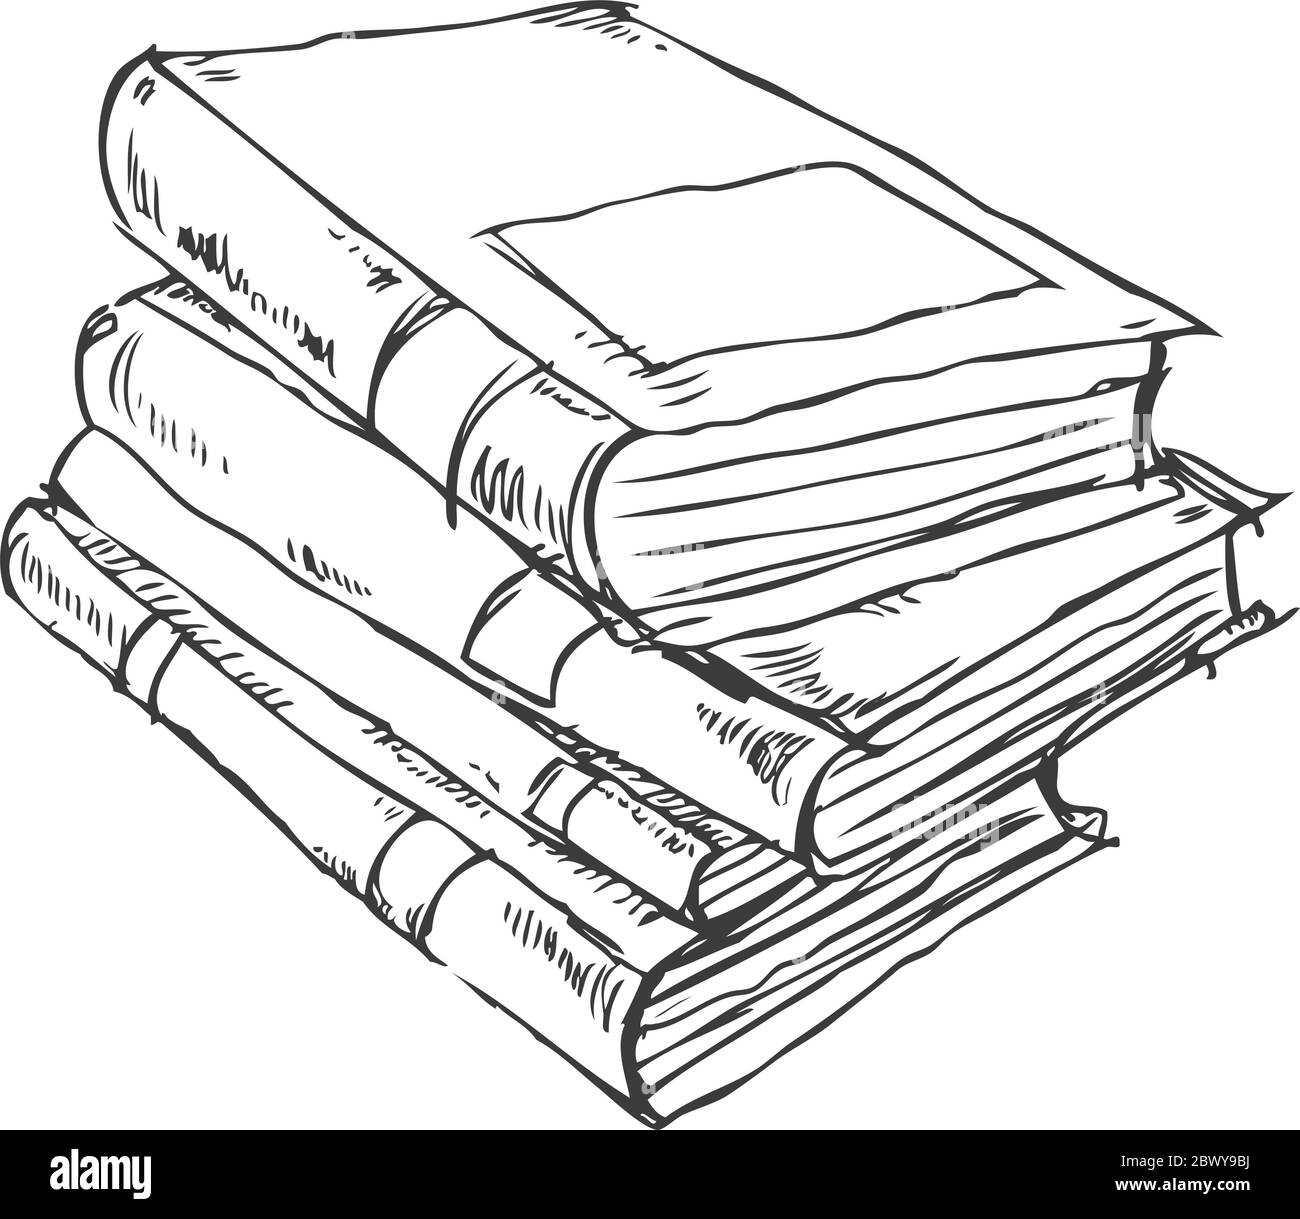 https://c8.alamy.com/comp/2BWY9BJ/vector-doodle-of-books-stack-2BWY9BJ.jpg